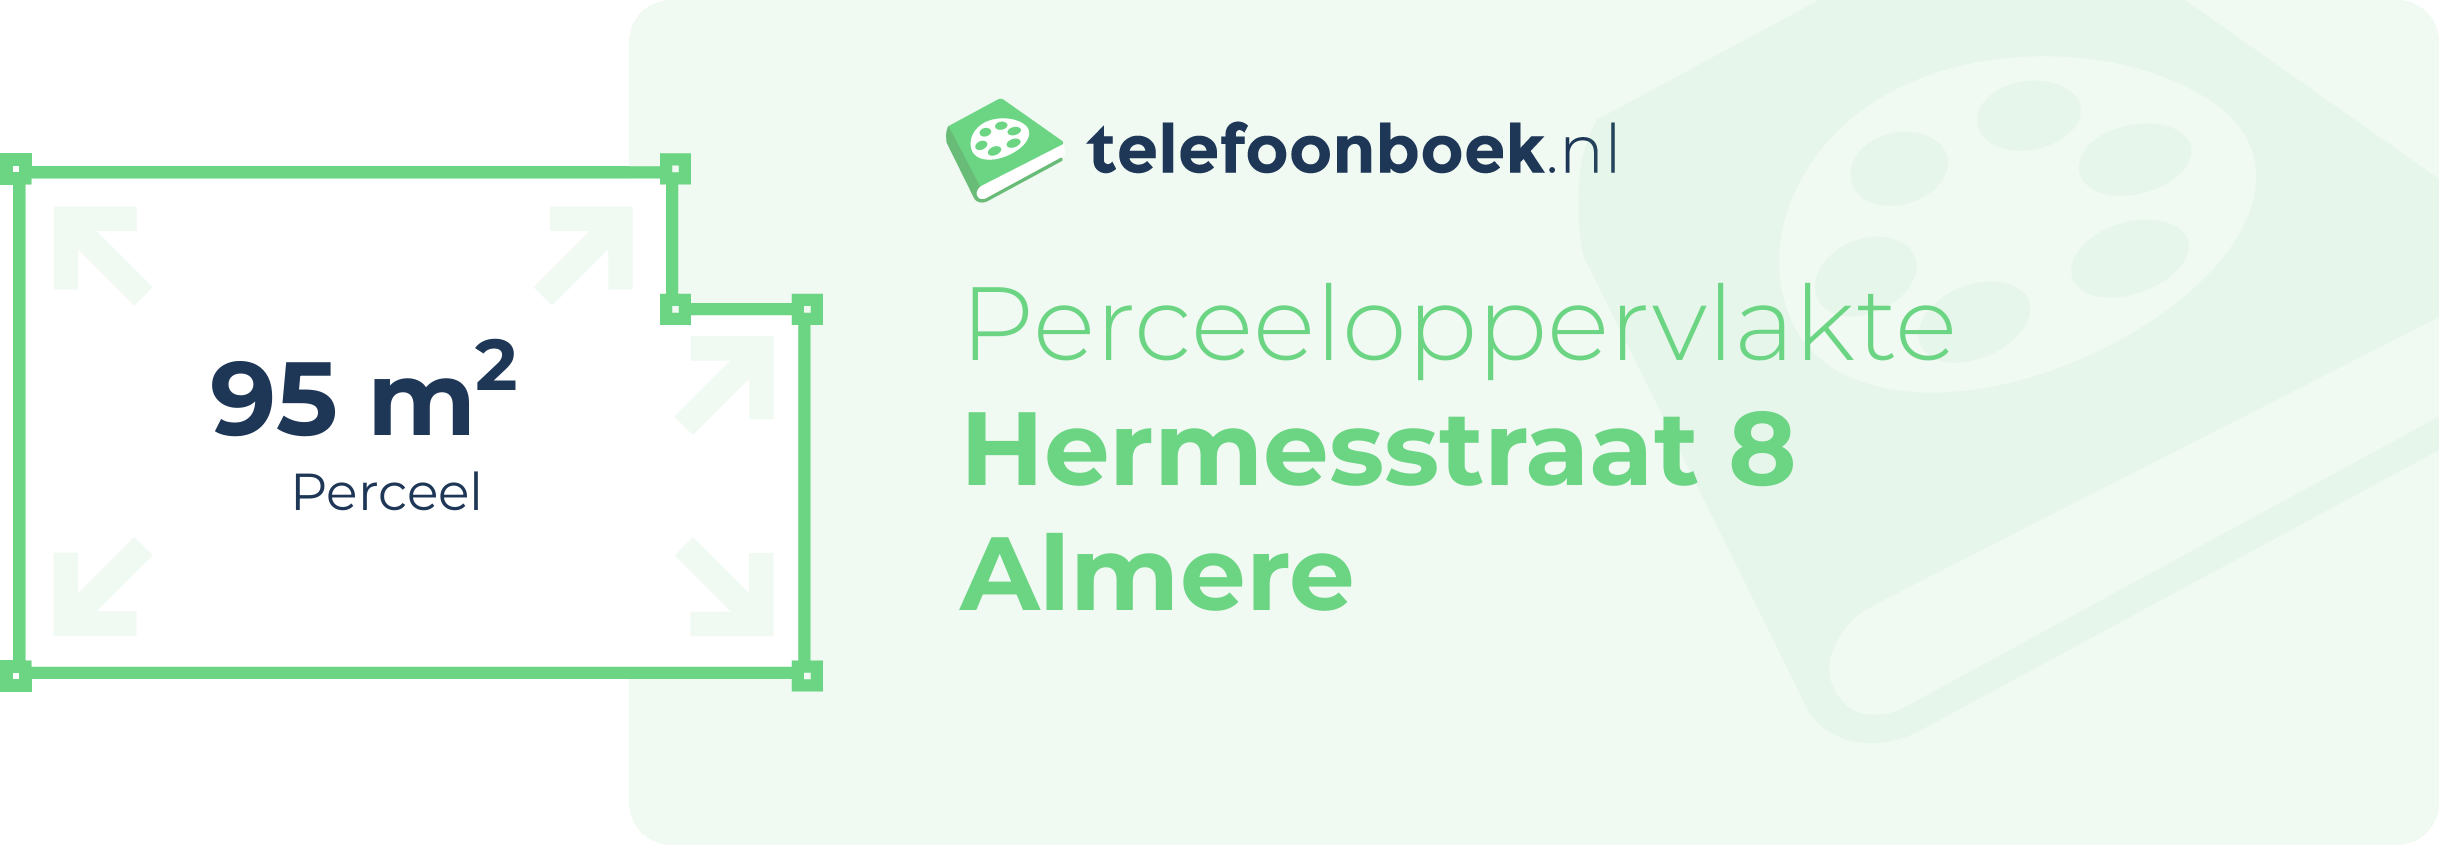 Perceeloppervlakte Hermesstraat 8 Almere